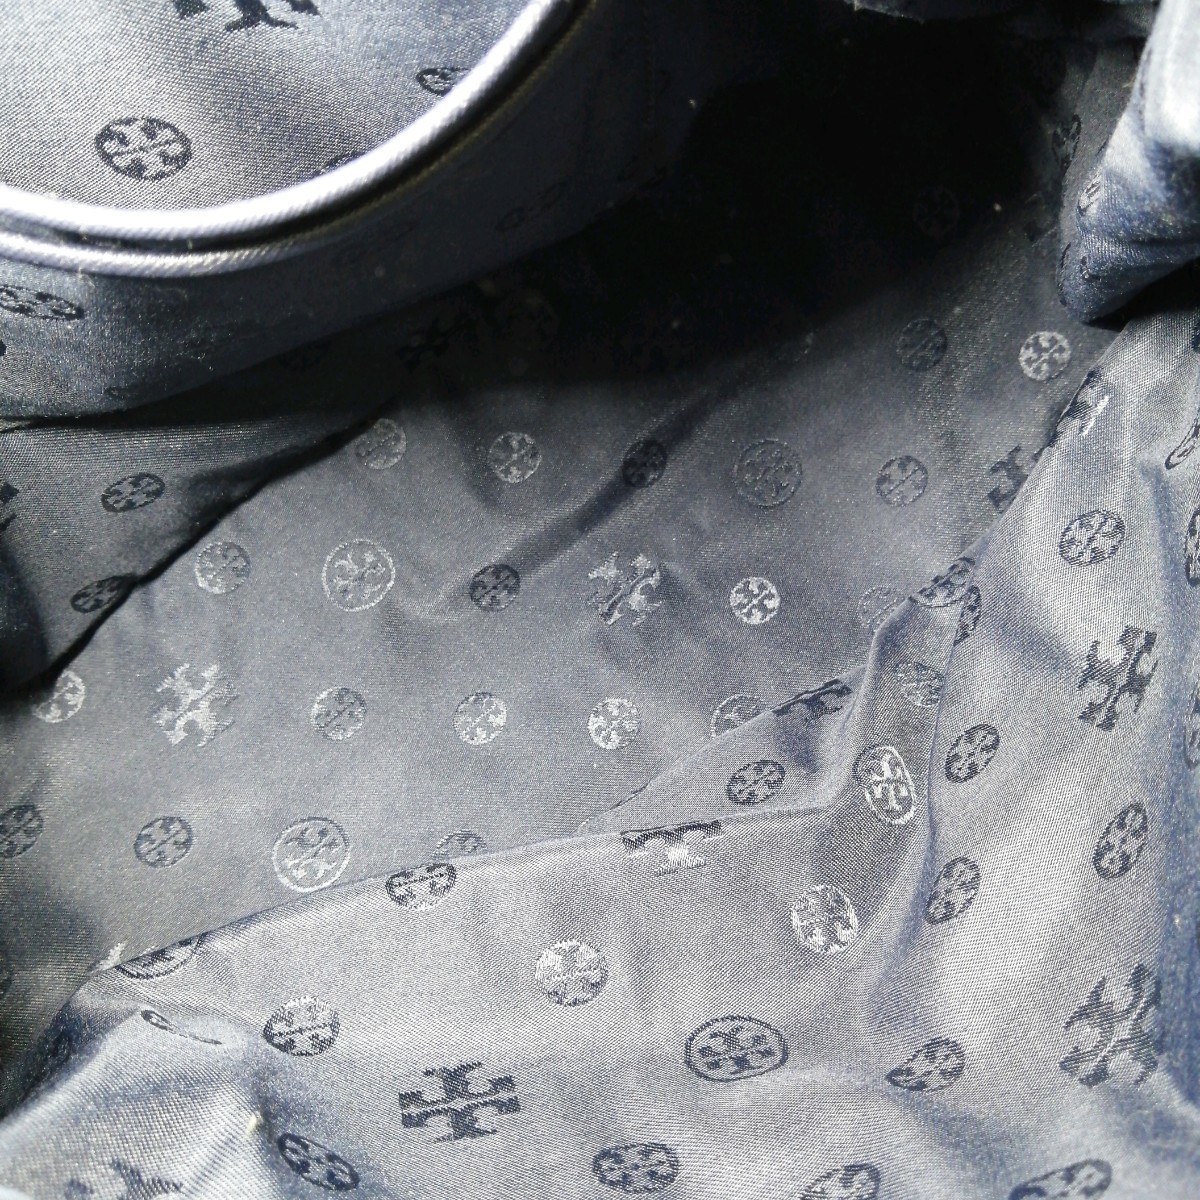 K Φ【商品ランク:B】 トリーバーチ TORY BURCH ロゴデザイン 一部 レザー セミショルダー 肩掛け トートバッグ 婦人鞄 ネイビー 紺系_画像9